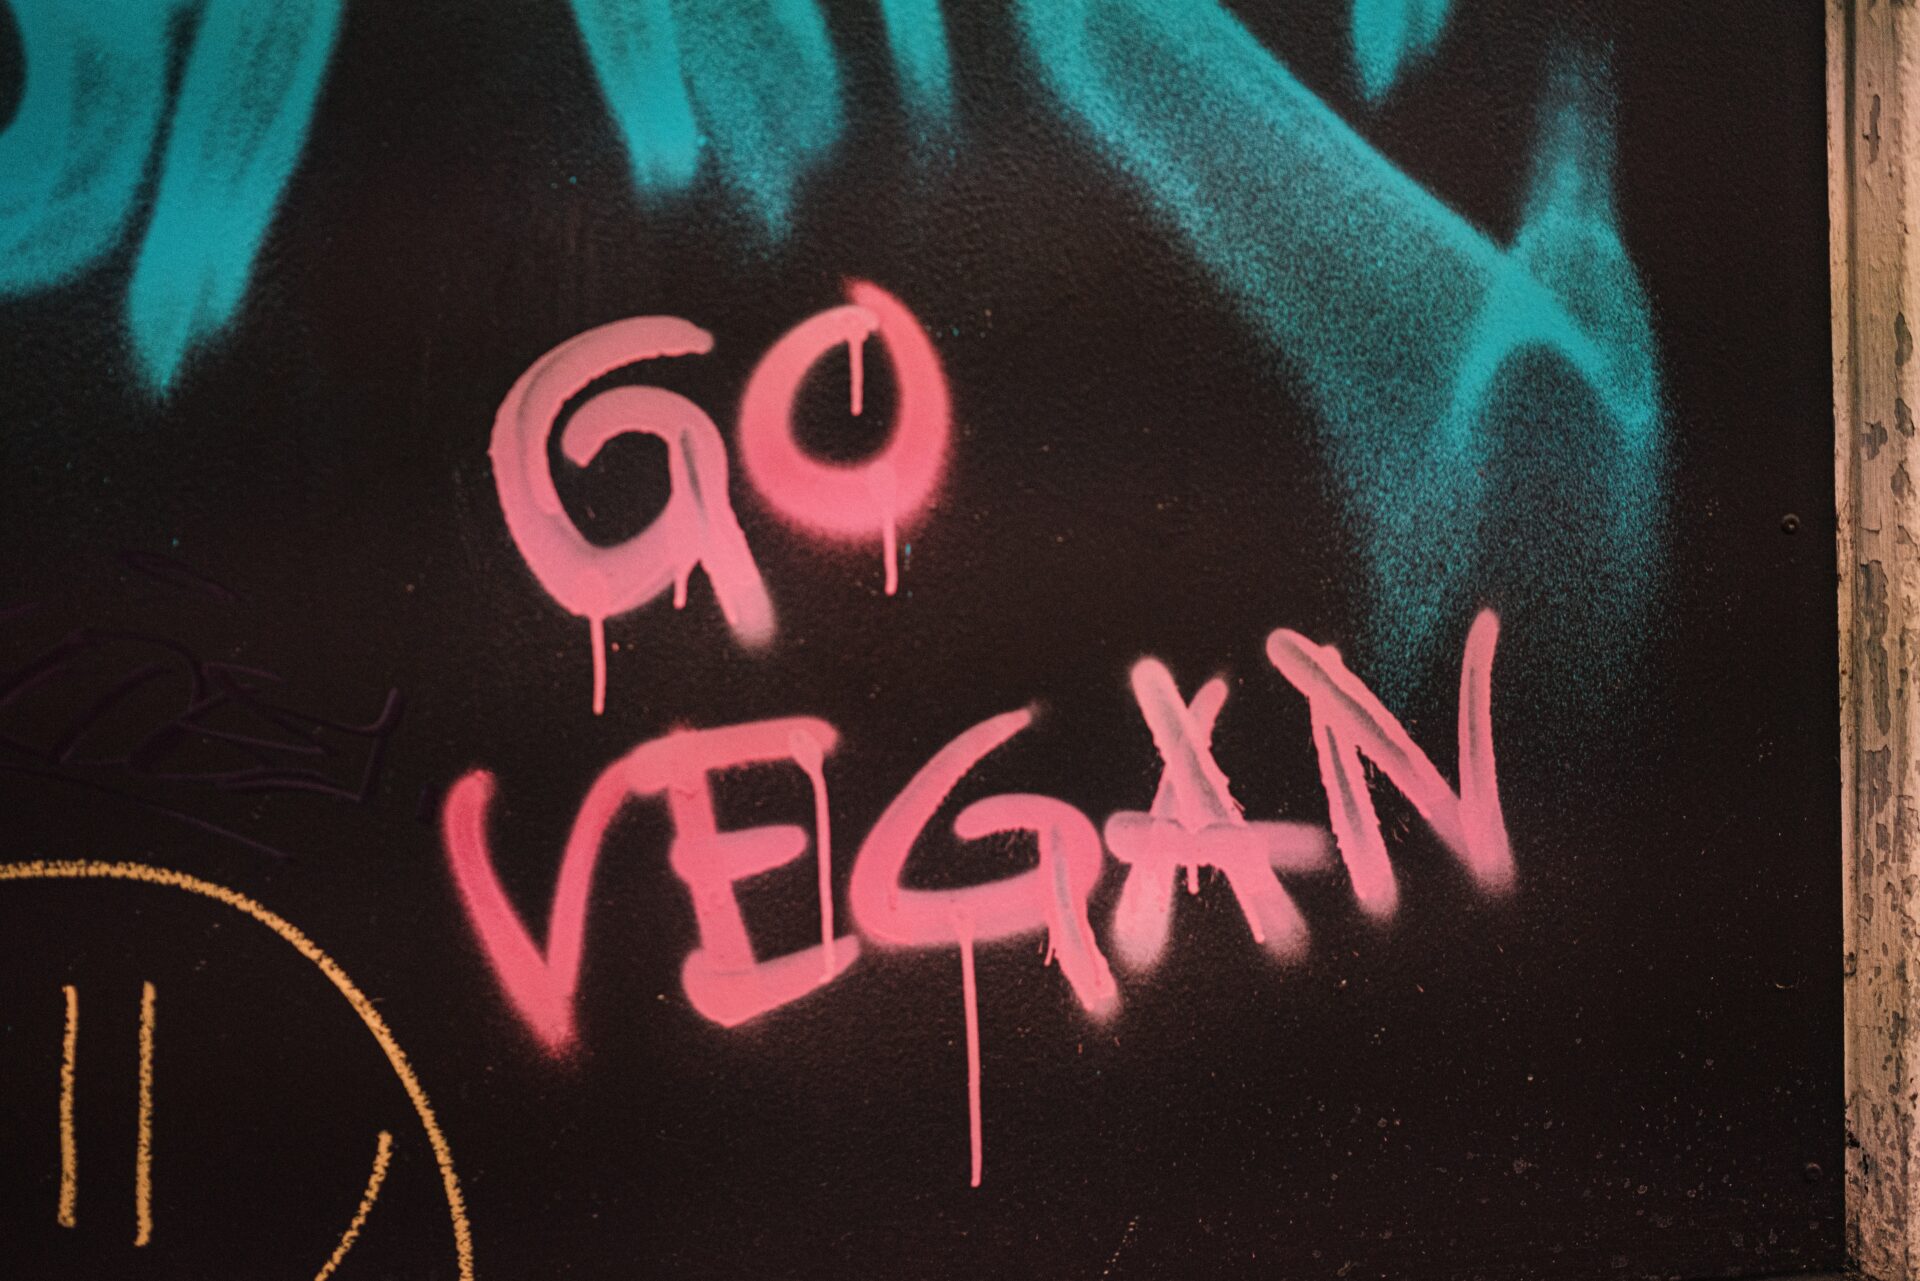 the inscription "Go Vegan" on a black board